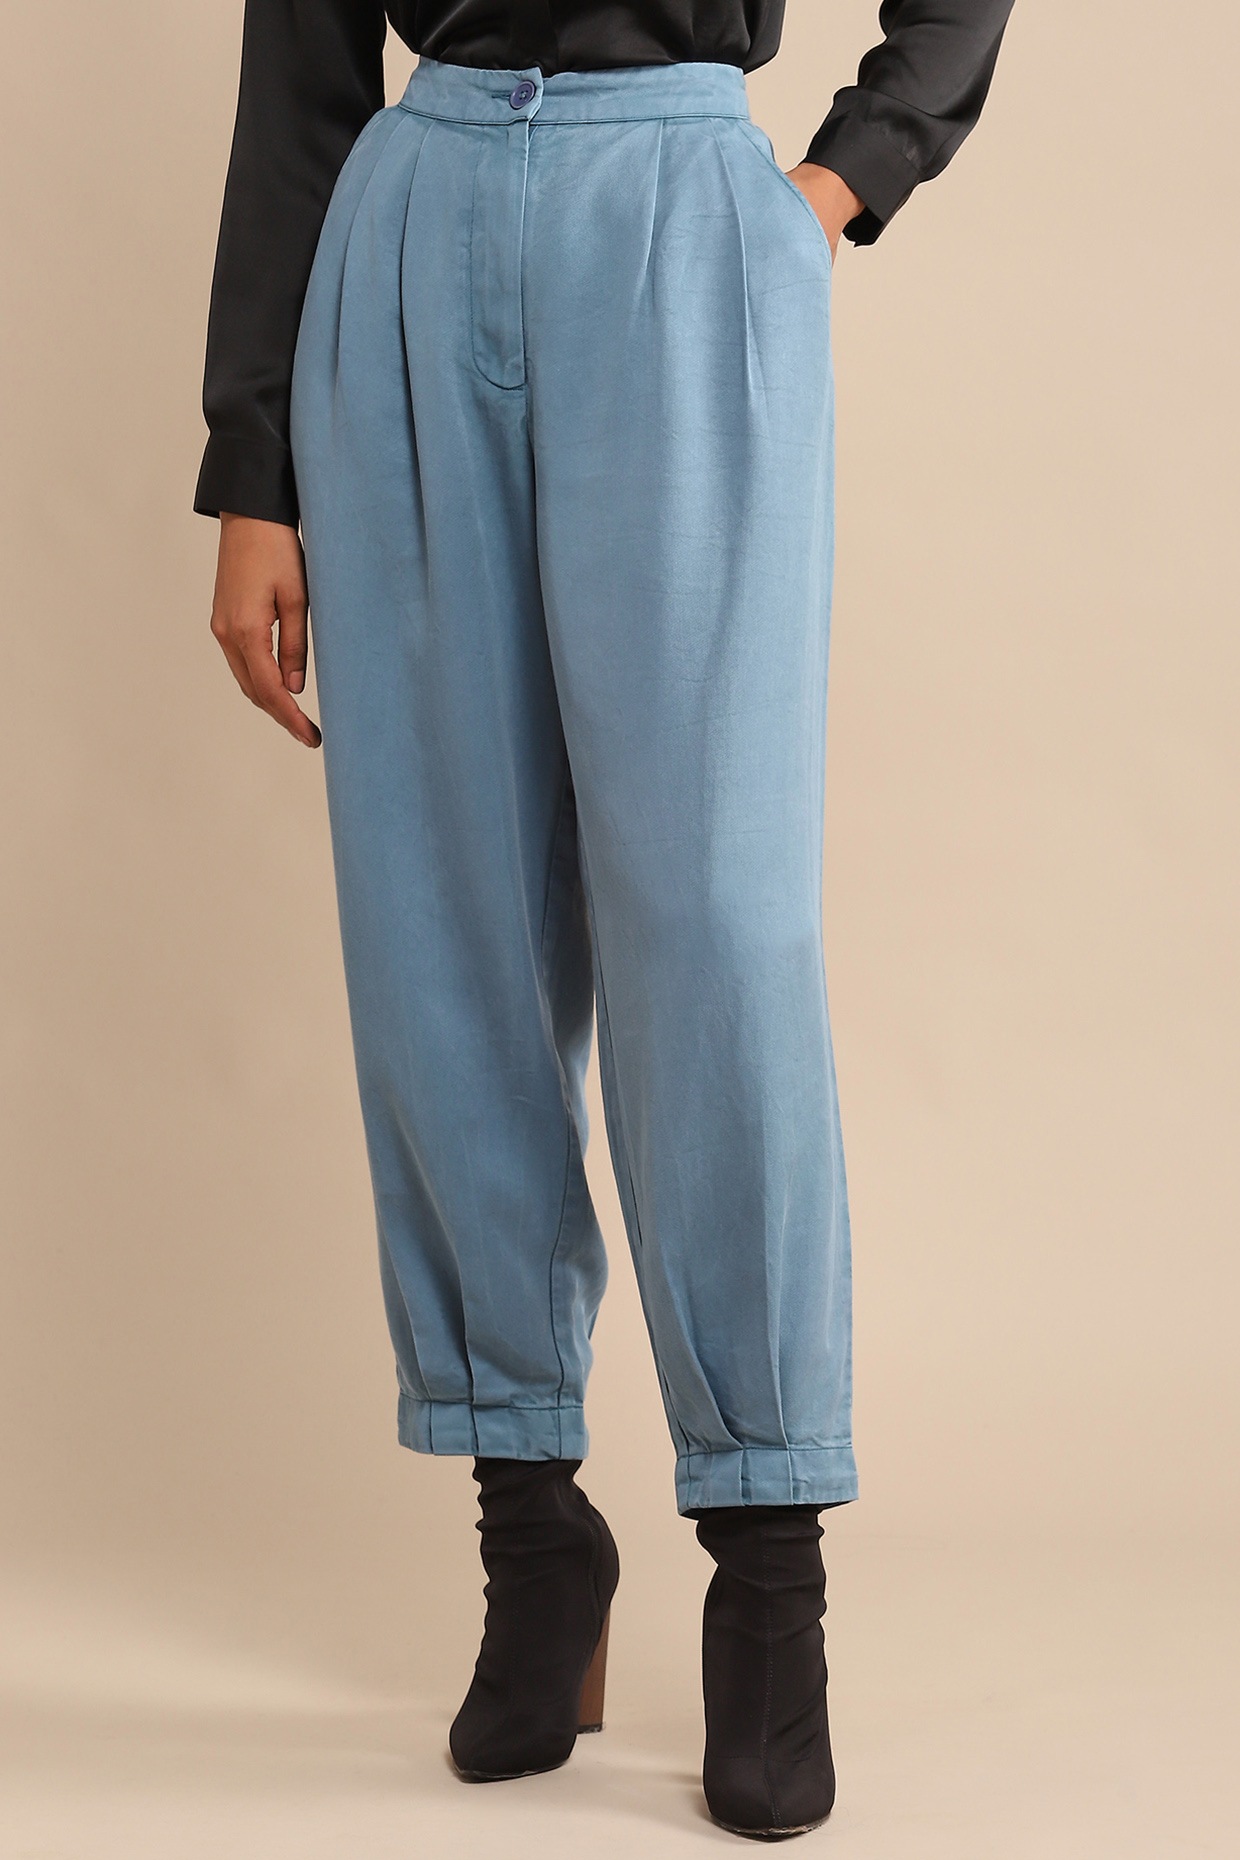 Kolkata Applique Wide-leg Pants (Designer trousers) – Chaa Latte